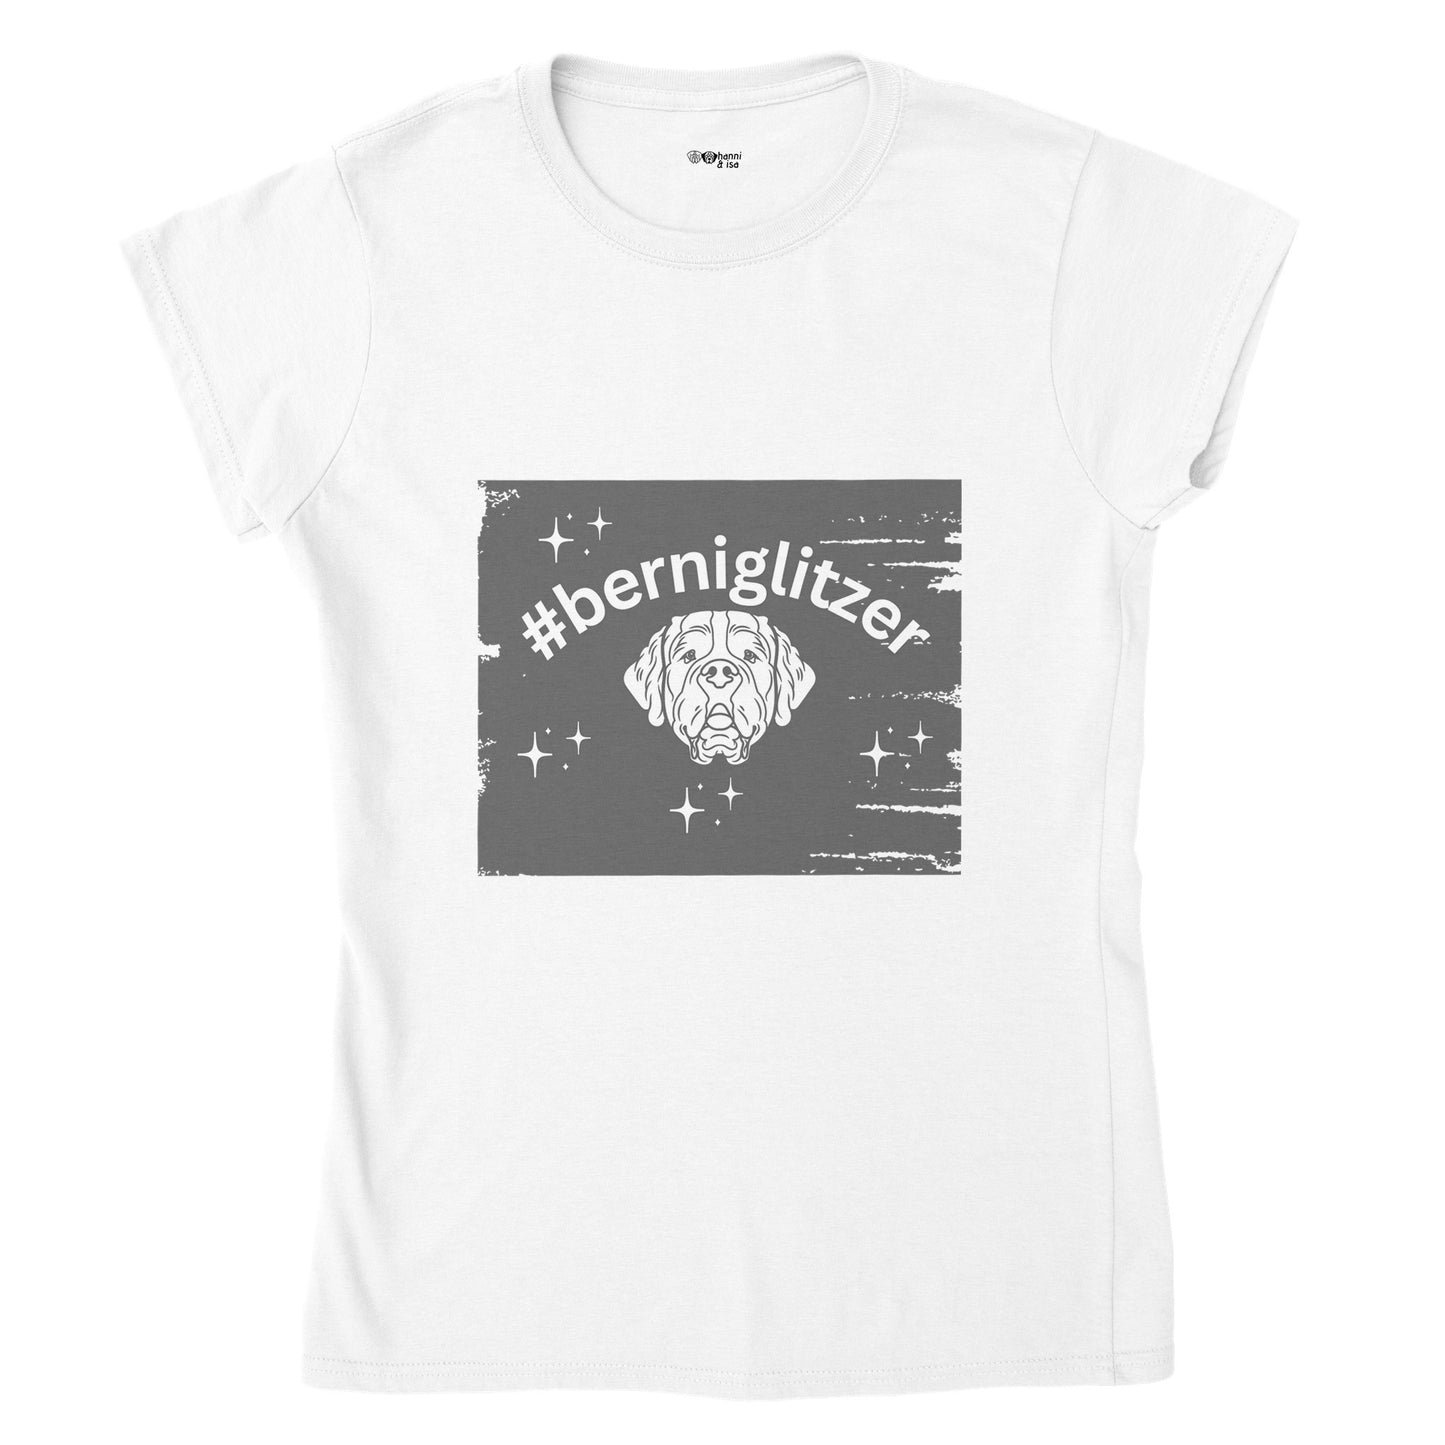 Berniglitzer Nelly women's T-shirt